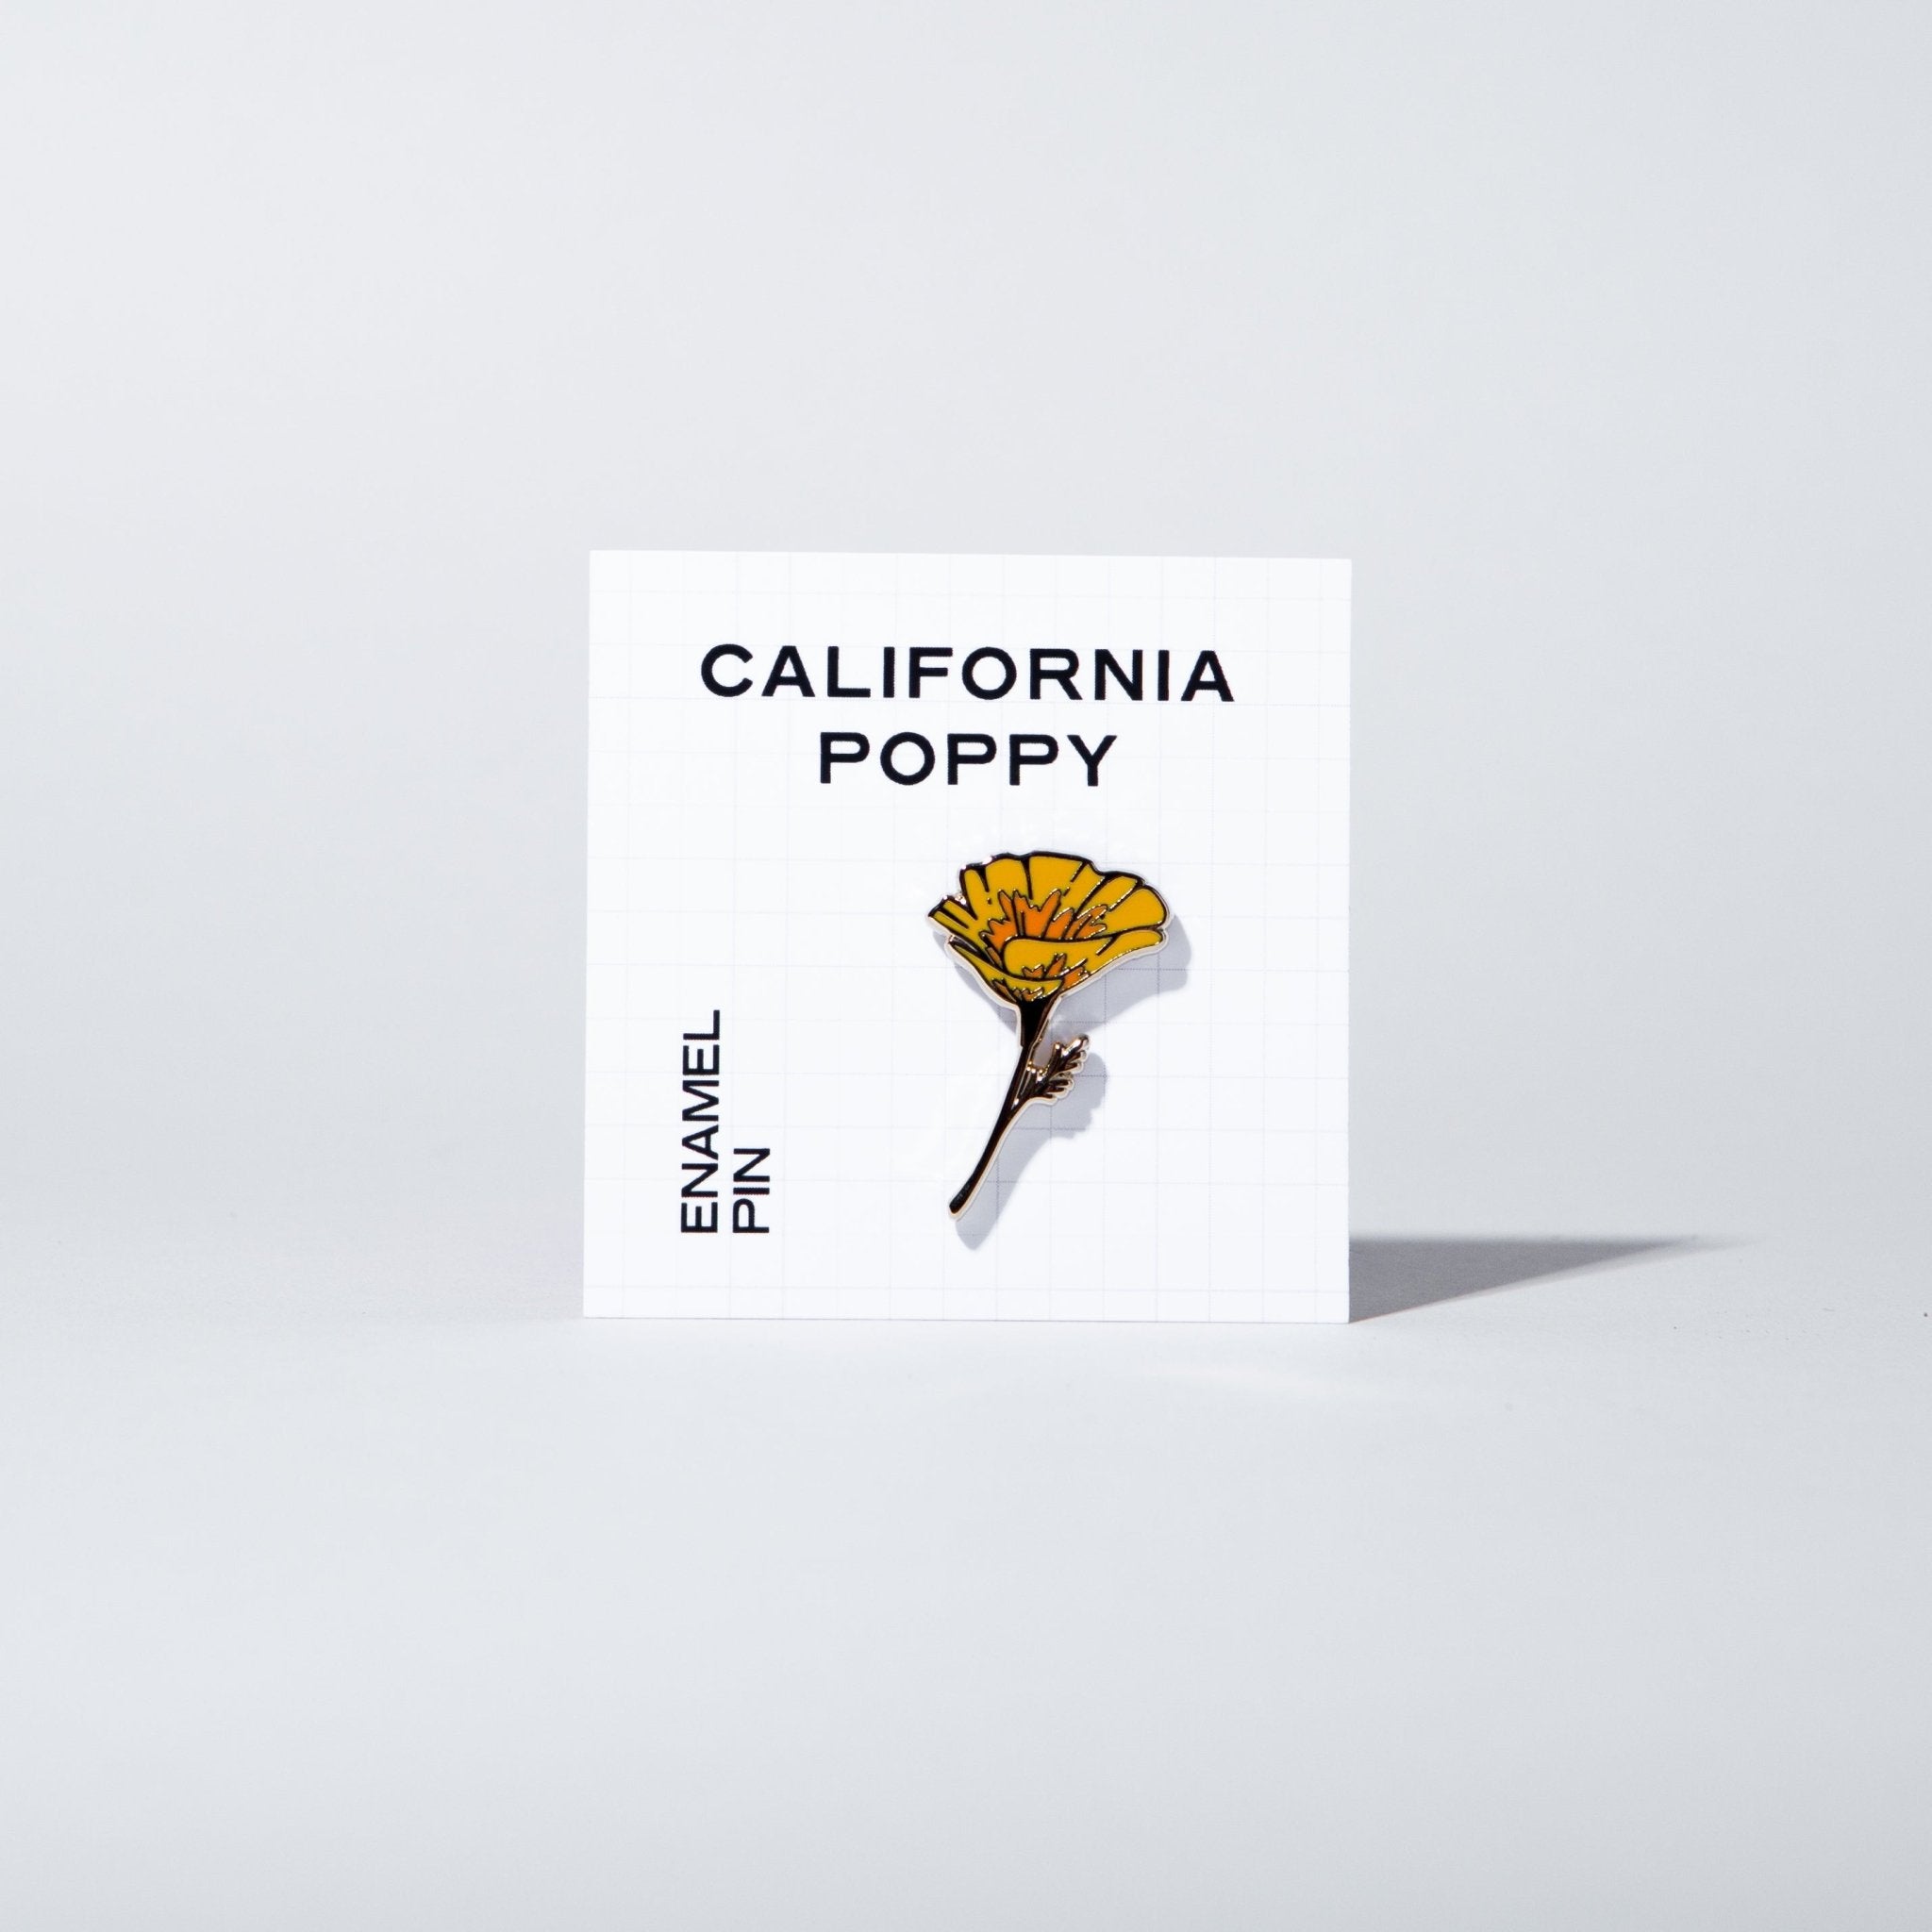 California Poppy Pin - Case Study